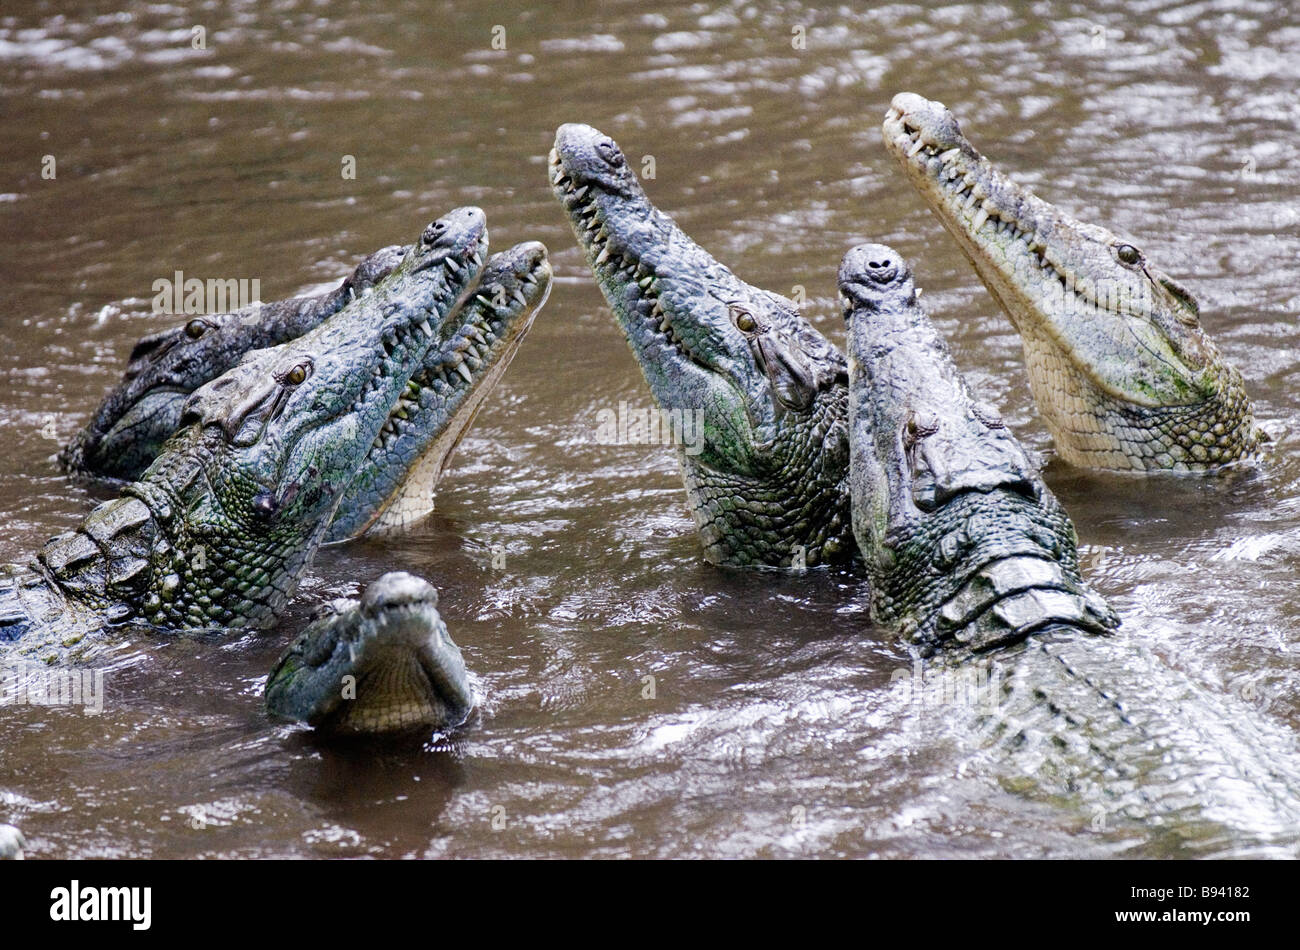 Feeding of crocodiles at Haller Park in Mombasa Kenya Stock Photo